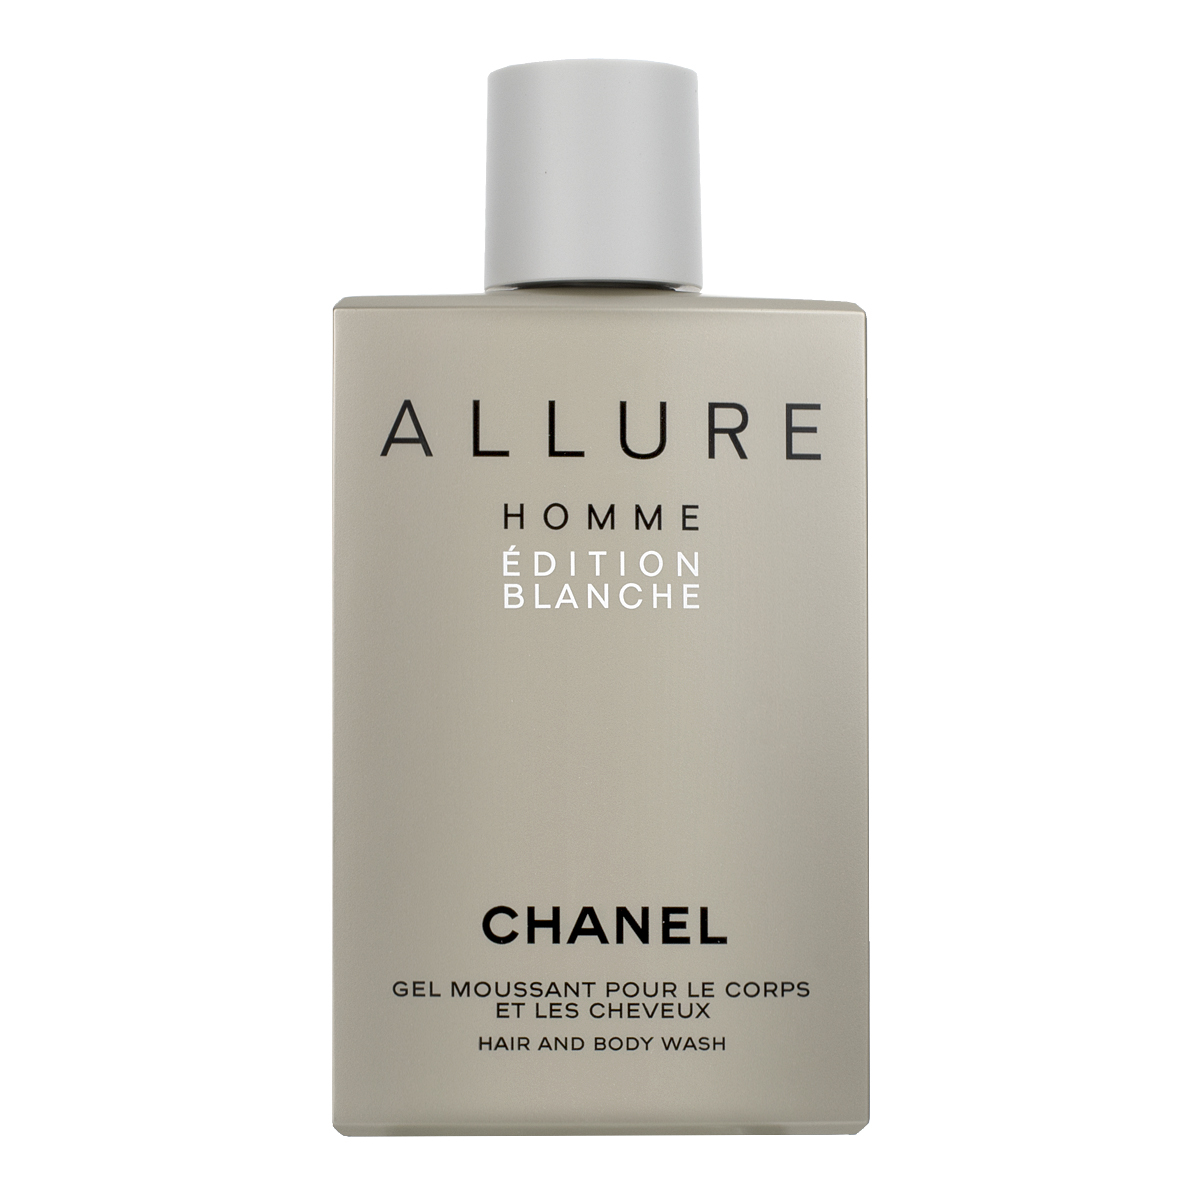 Chanel Allure Homme Blanche Edition Hair & Body Wash 200ml